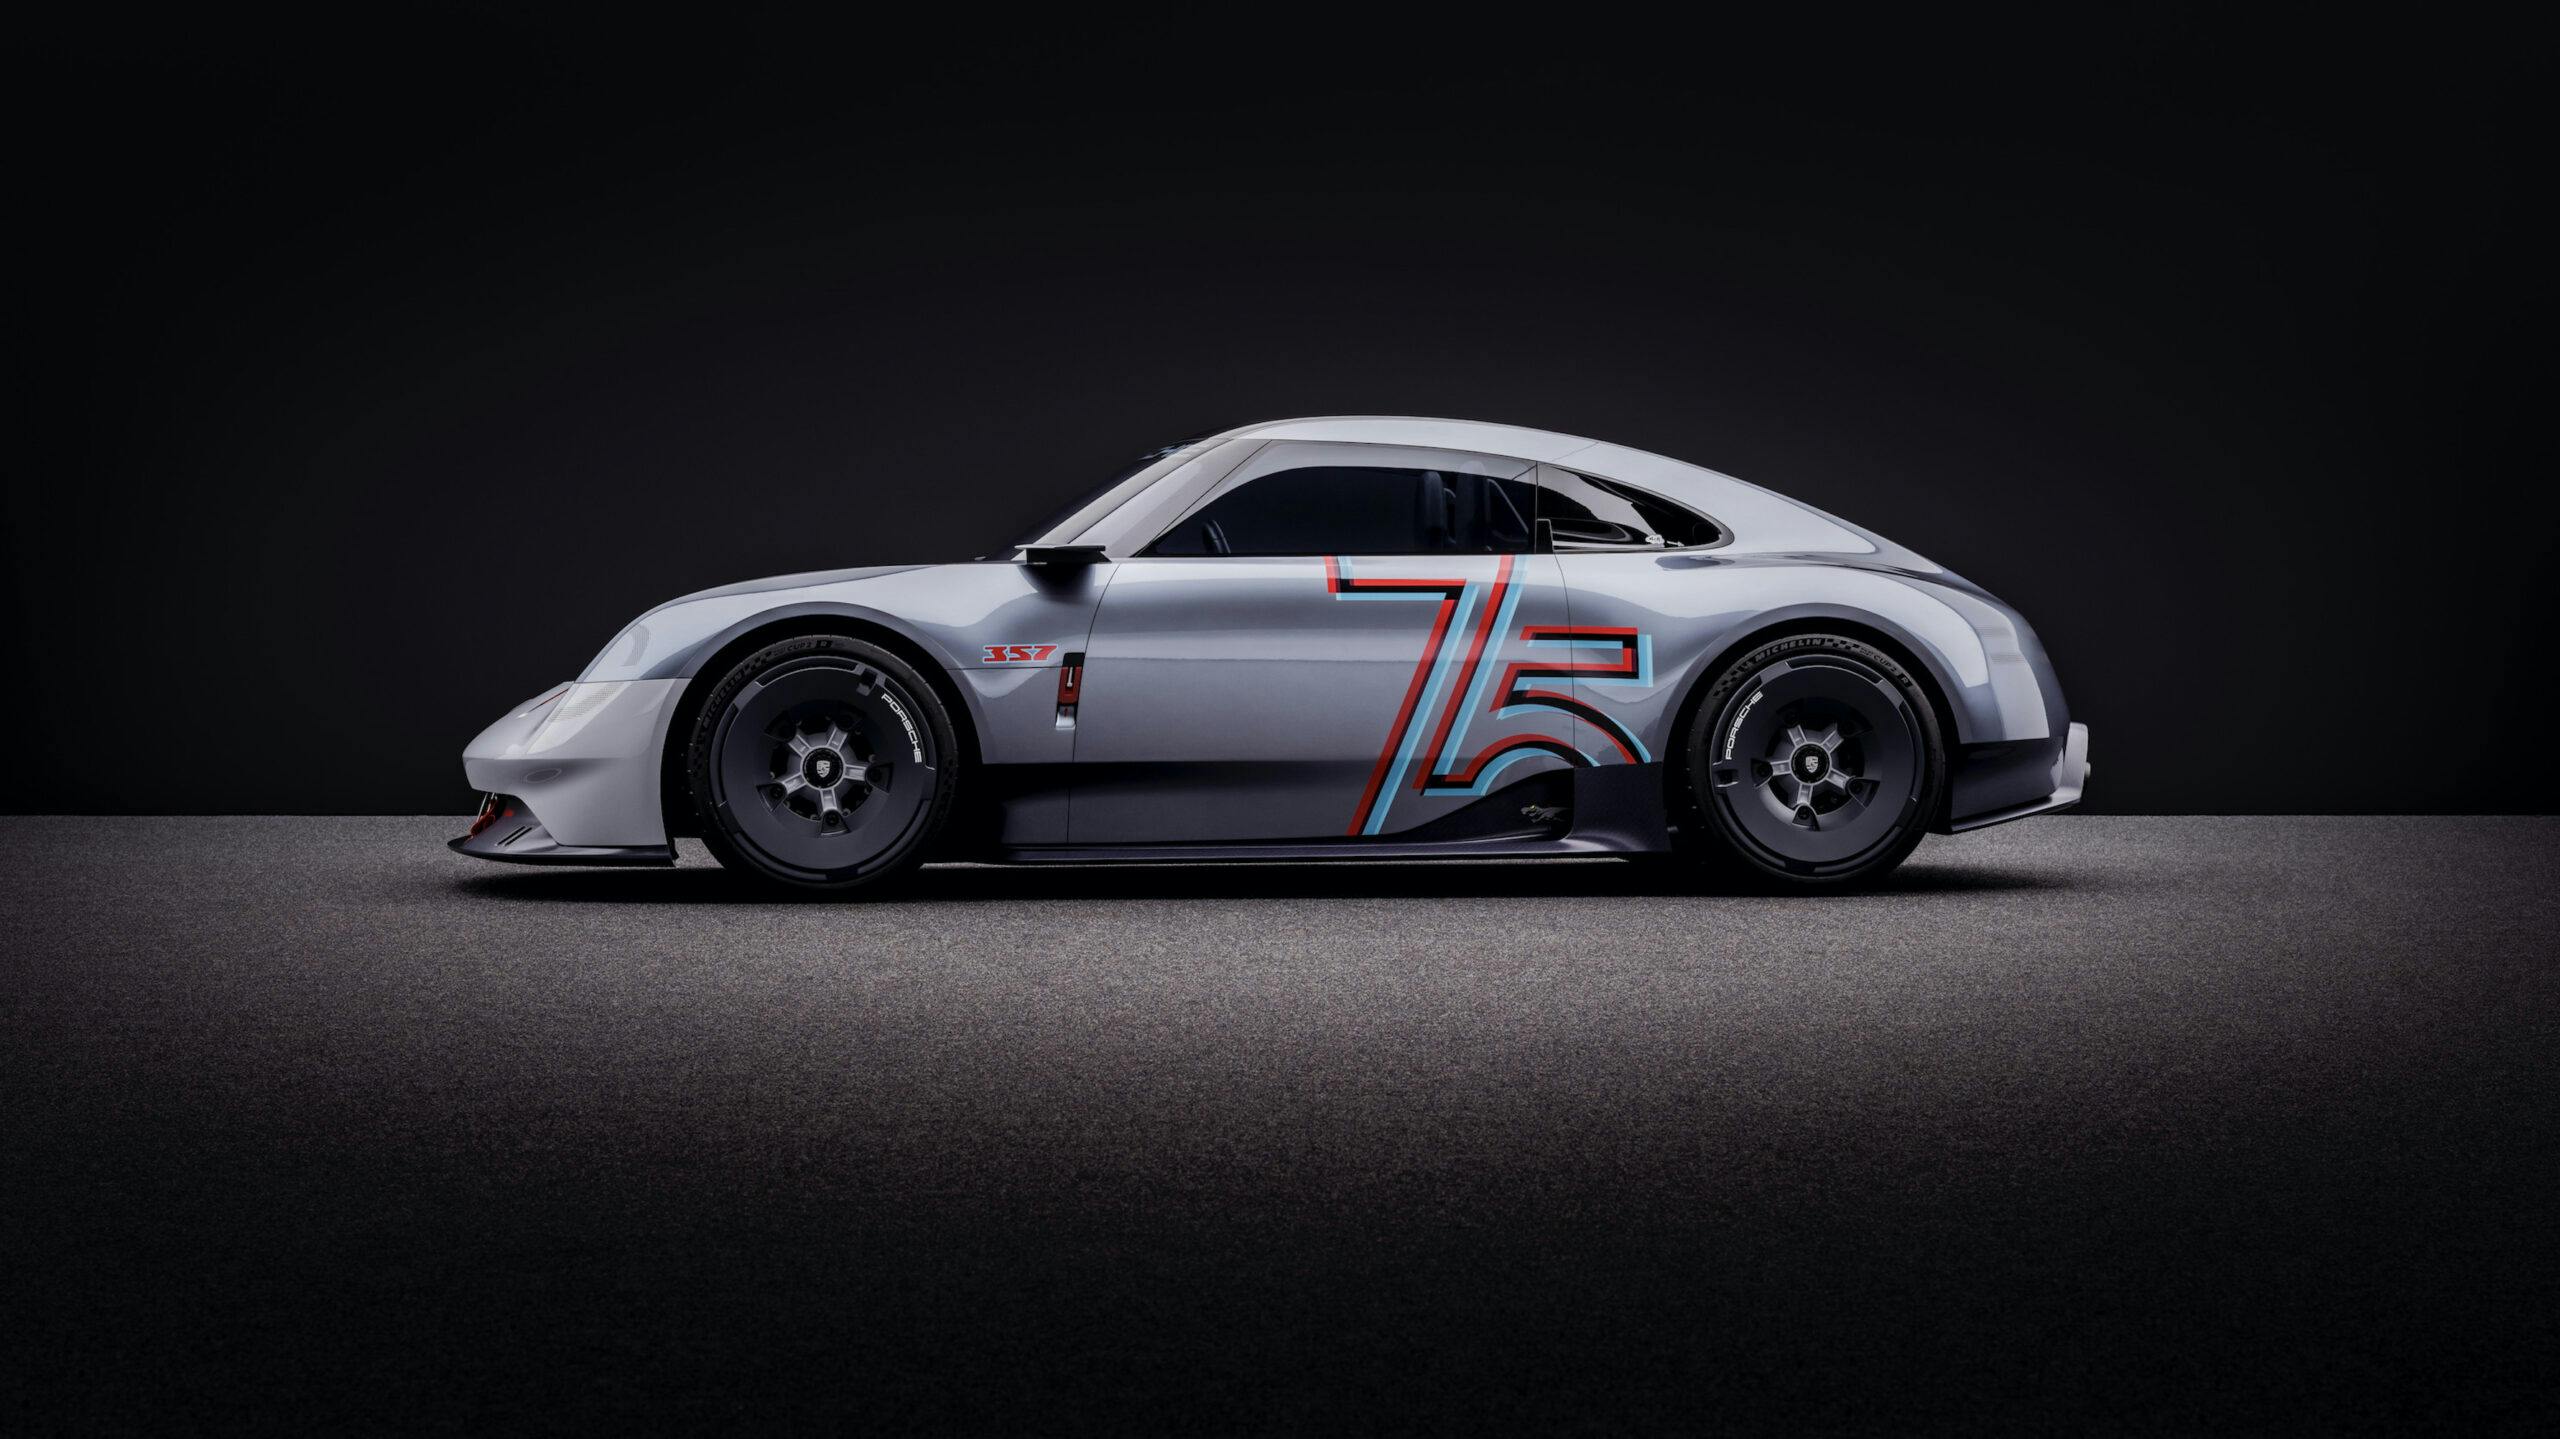 Porsche 357 design study exterior driver's side profile